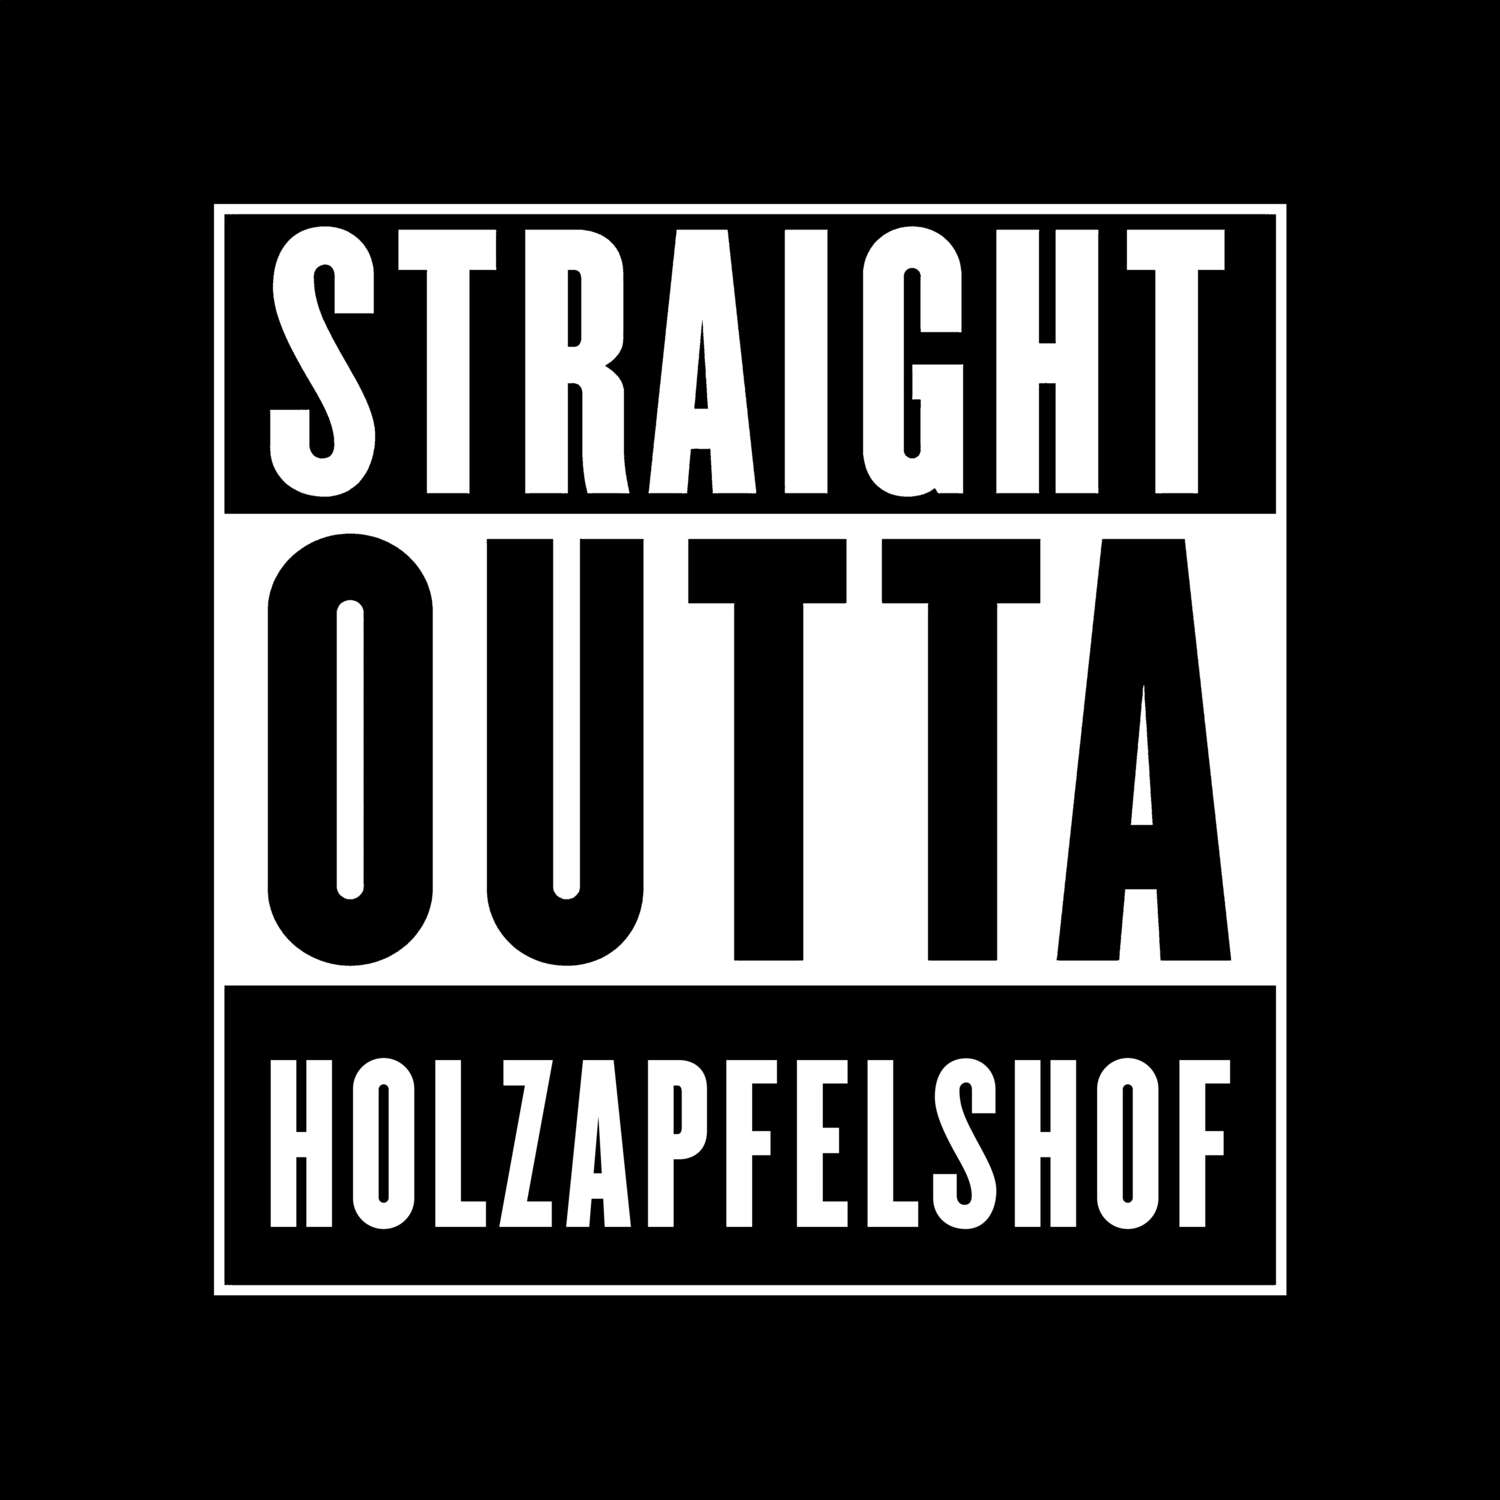 Holzapfelshof T-Shirt »Straight Outta«